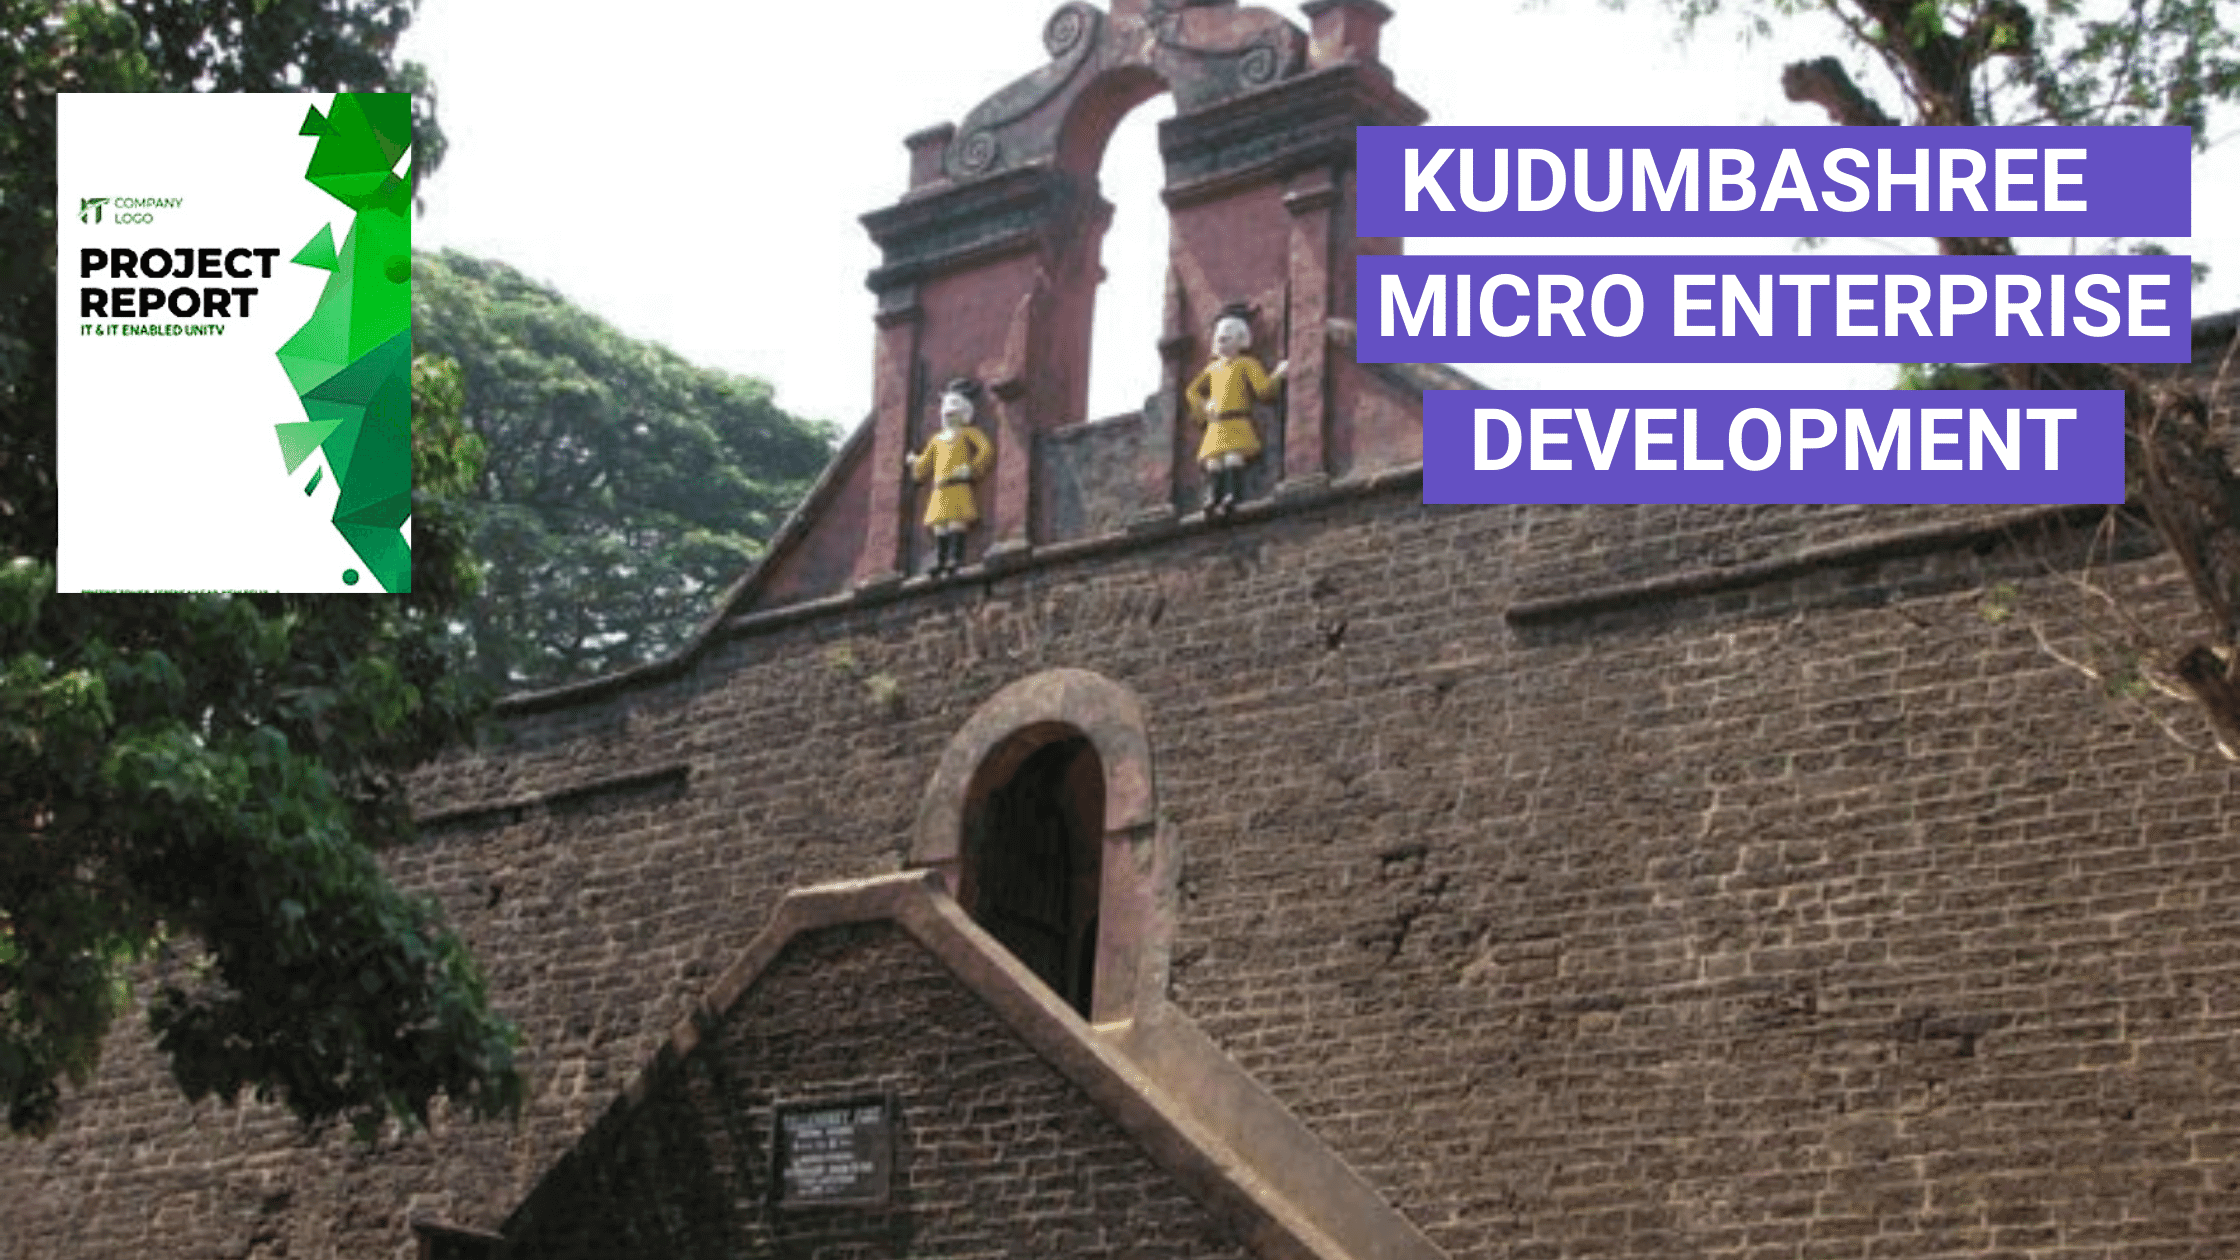 Kudumbashree Micro Enterprise Development